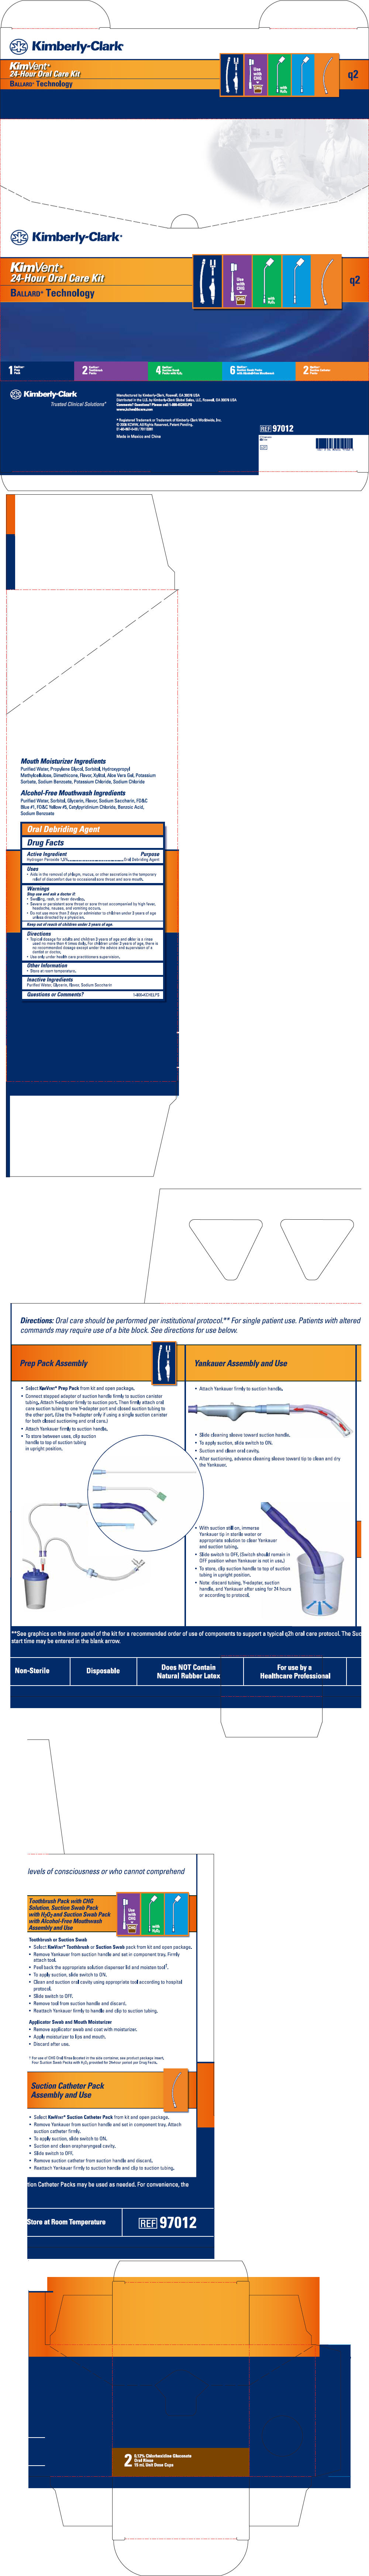 Principal Display Panel - Kit Carton